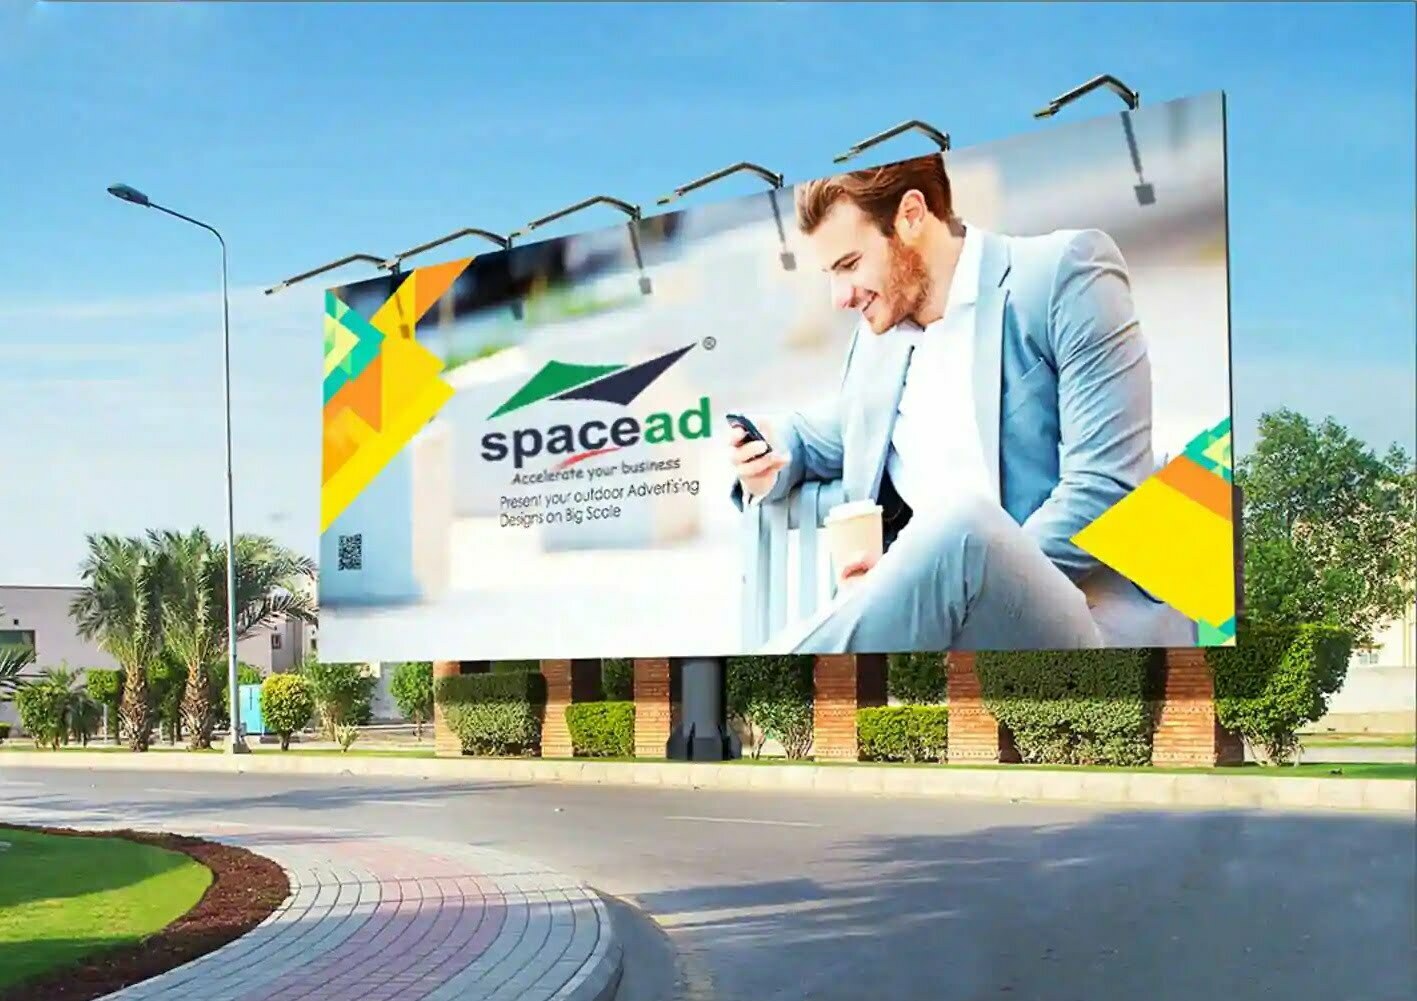 Spacead advertisement